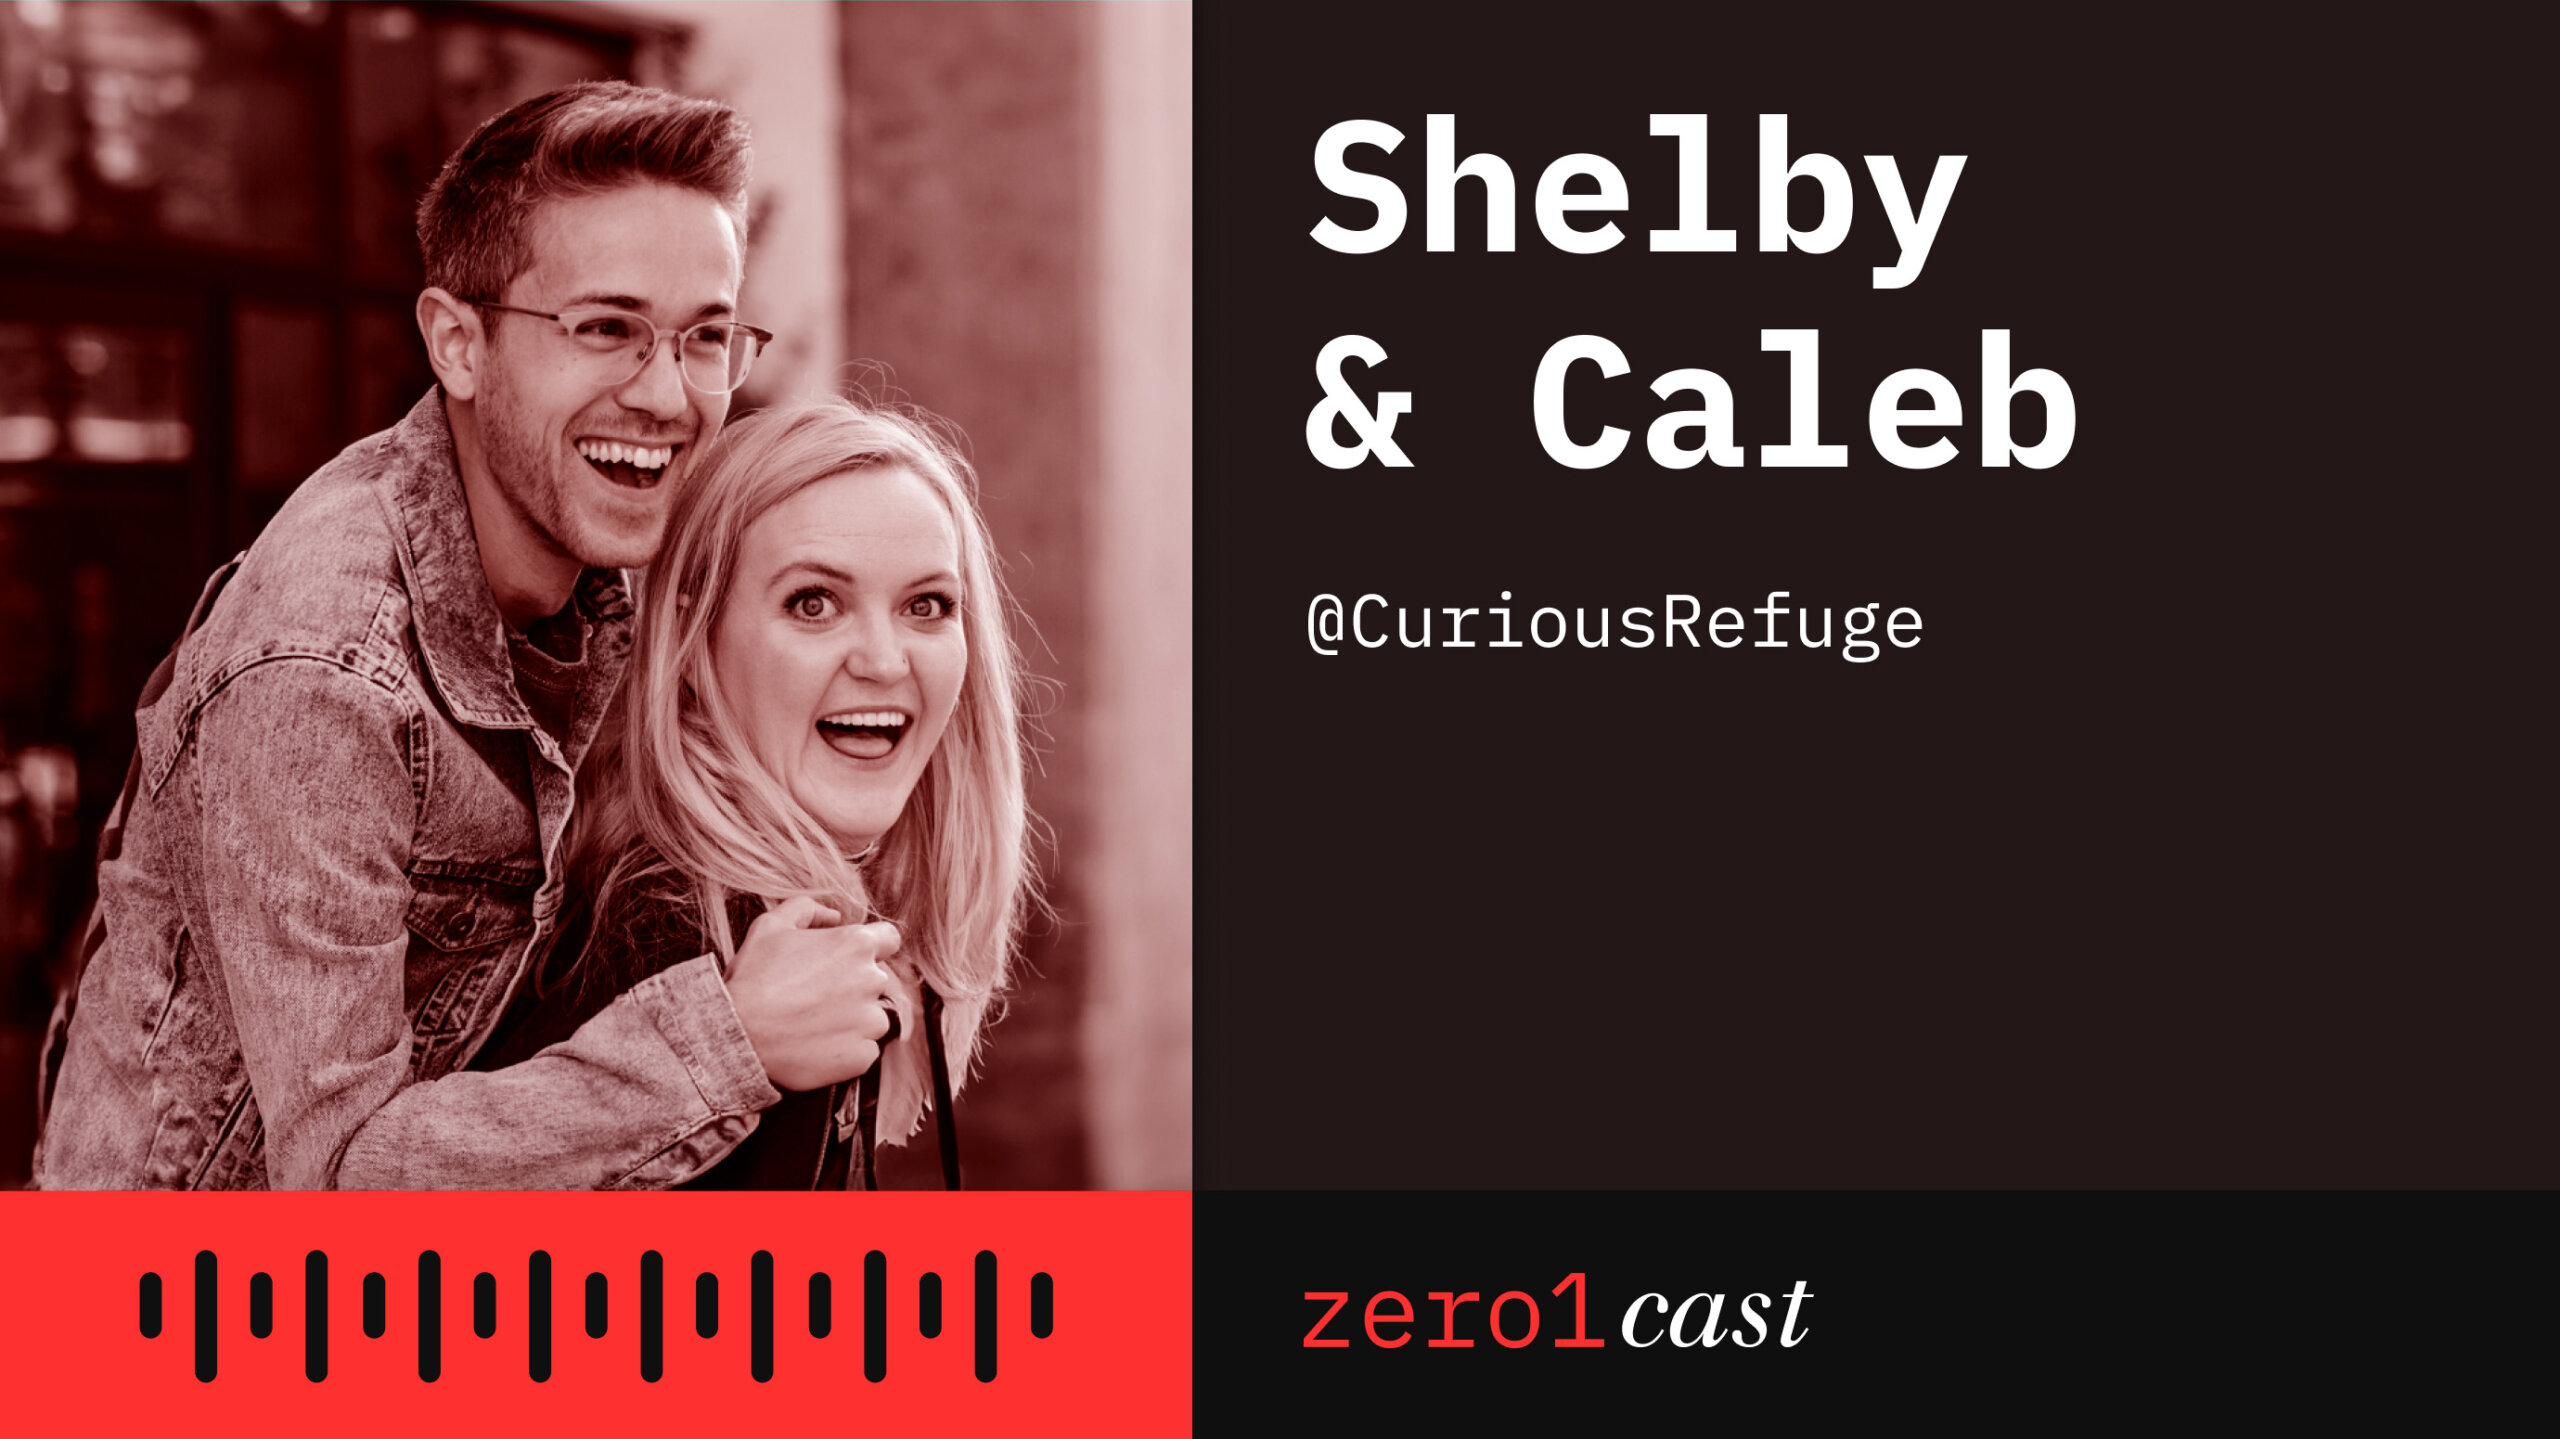 Curious Refuge (Shelby & Caleb) – AI film school, going viral, Sora, creativity, more